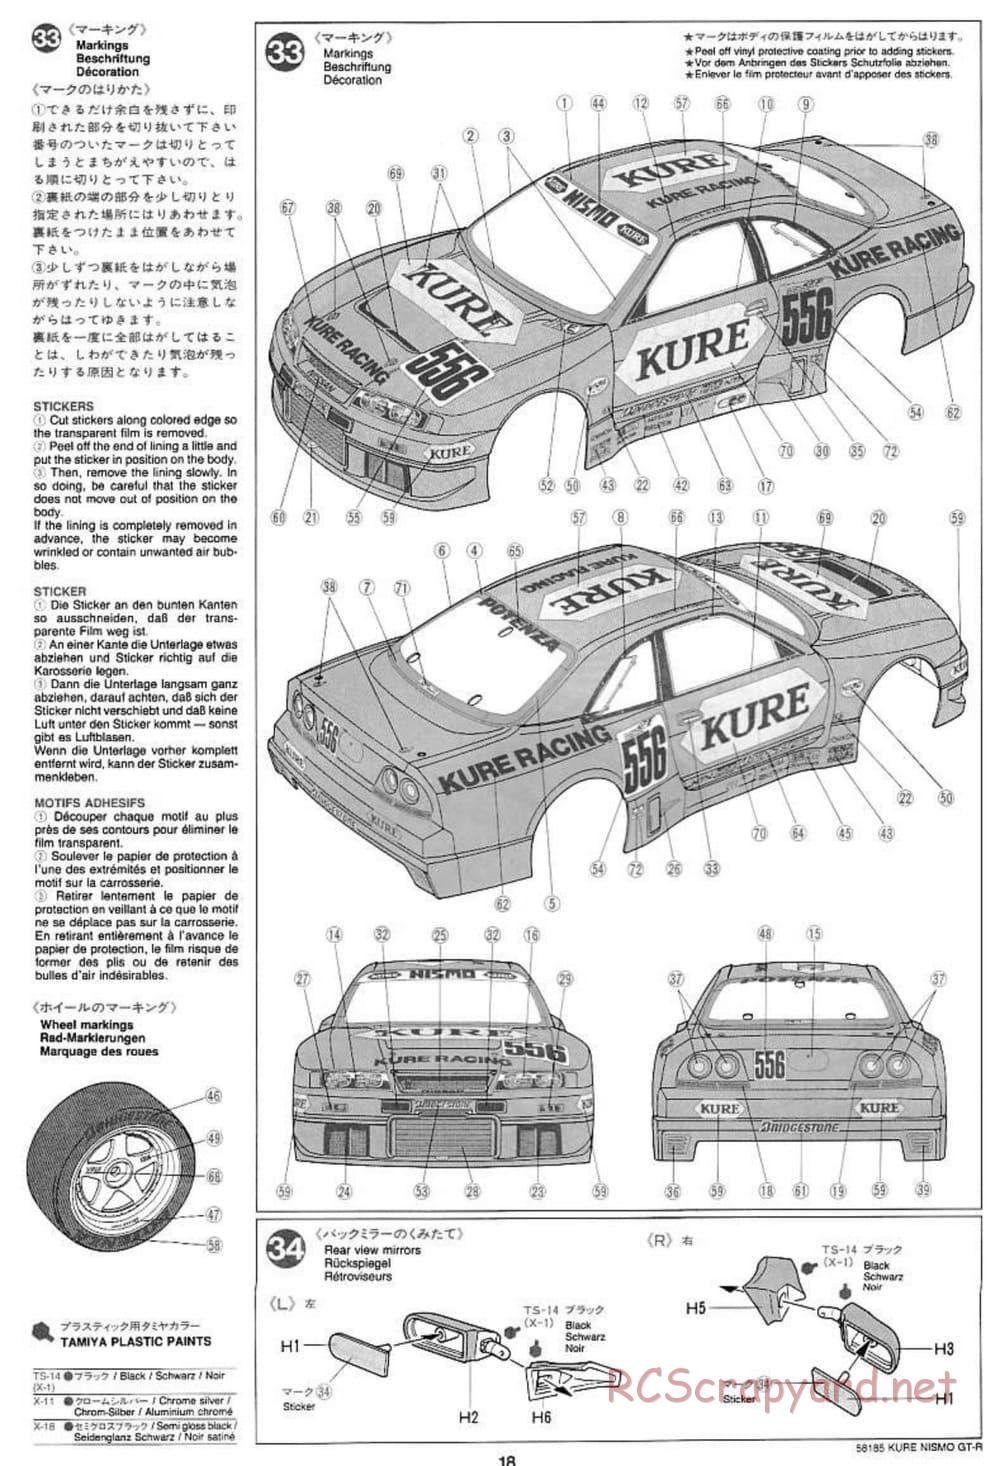 Tamiya - Kure Nismo GT-R - TA-03F Chassis - Manual - Page 18